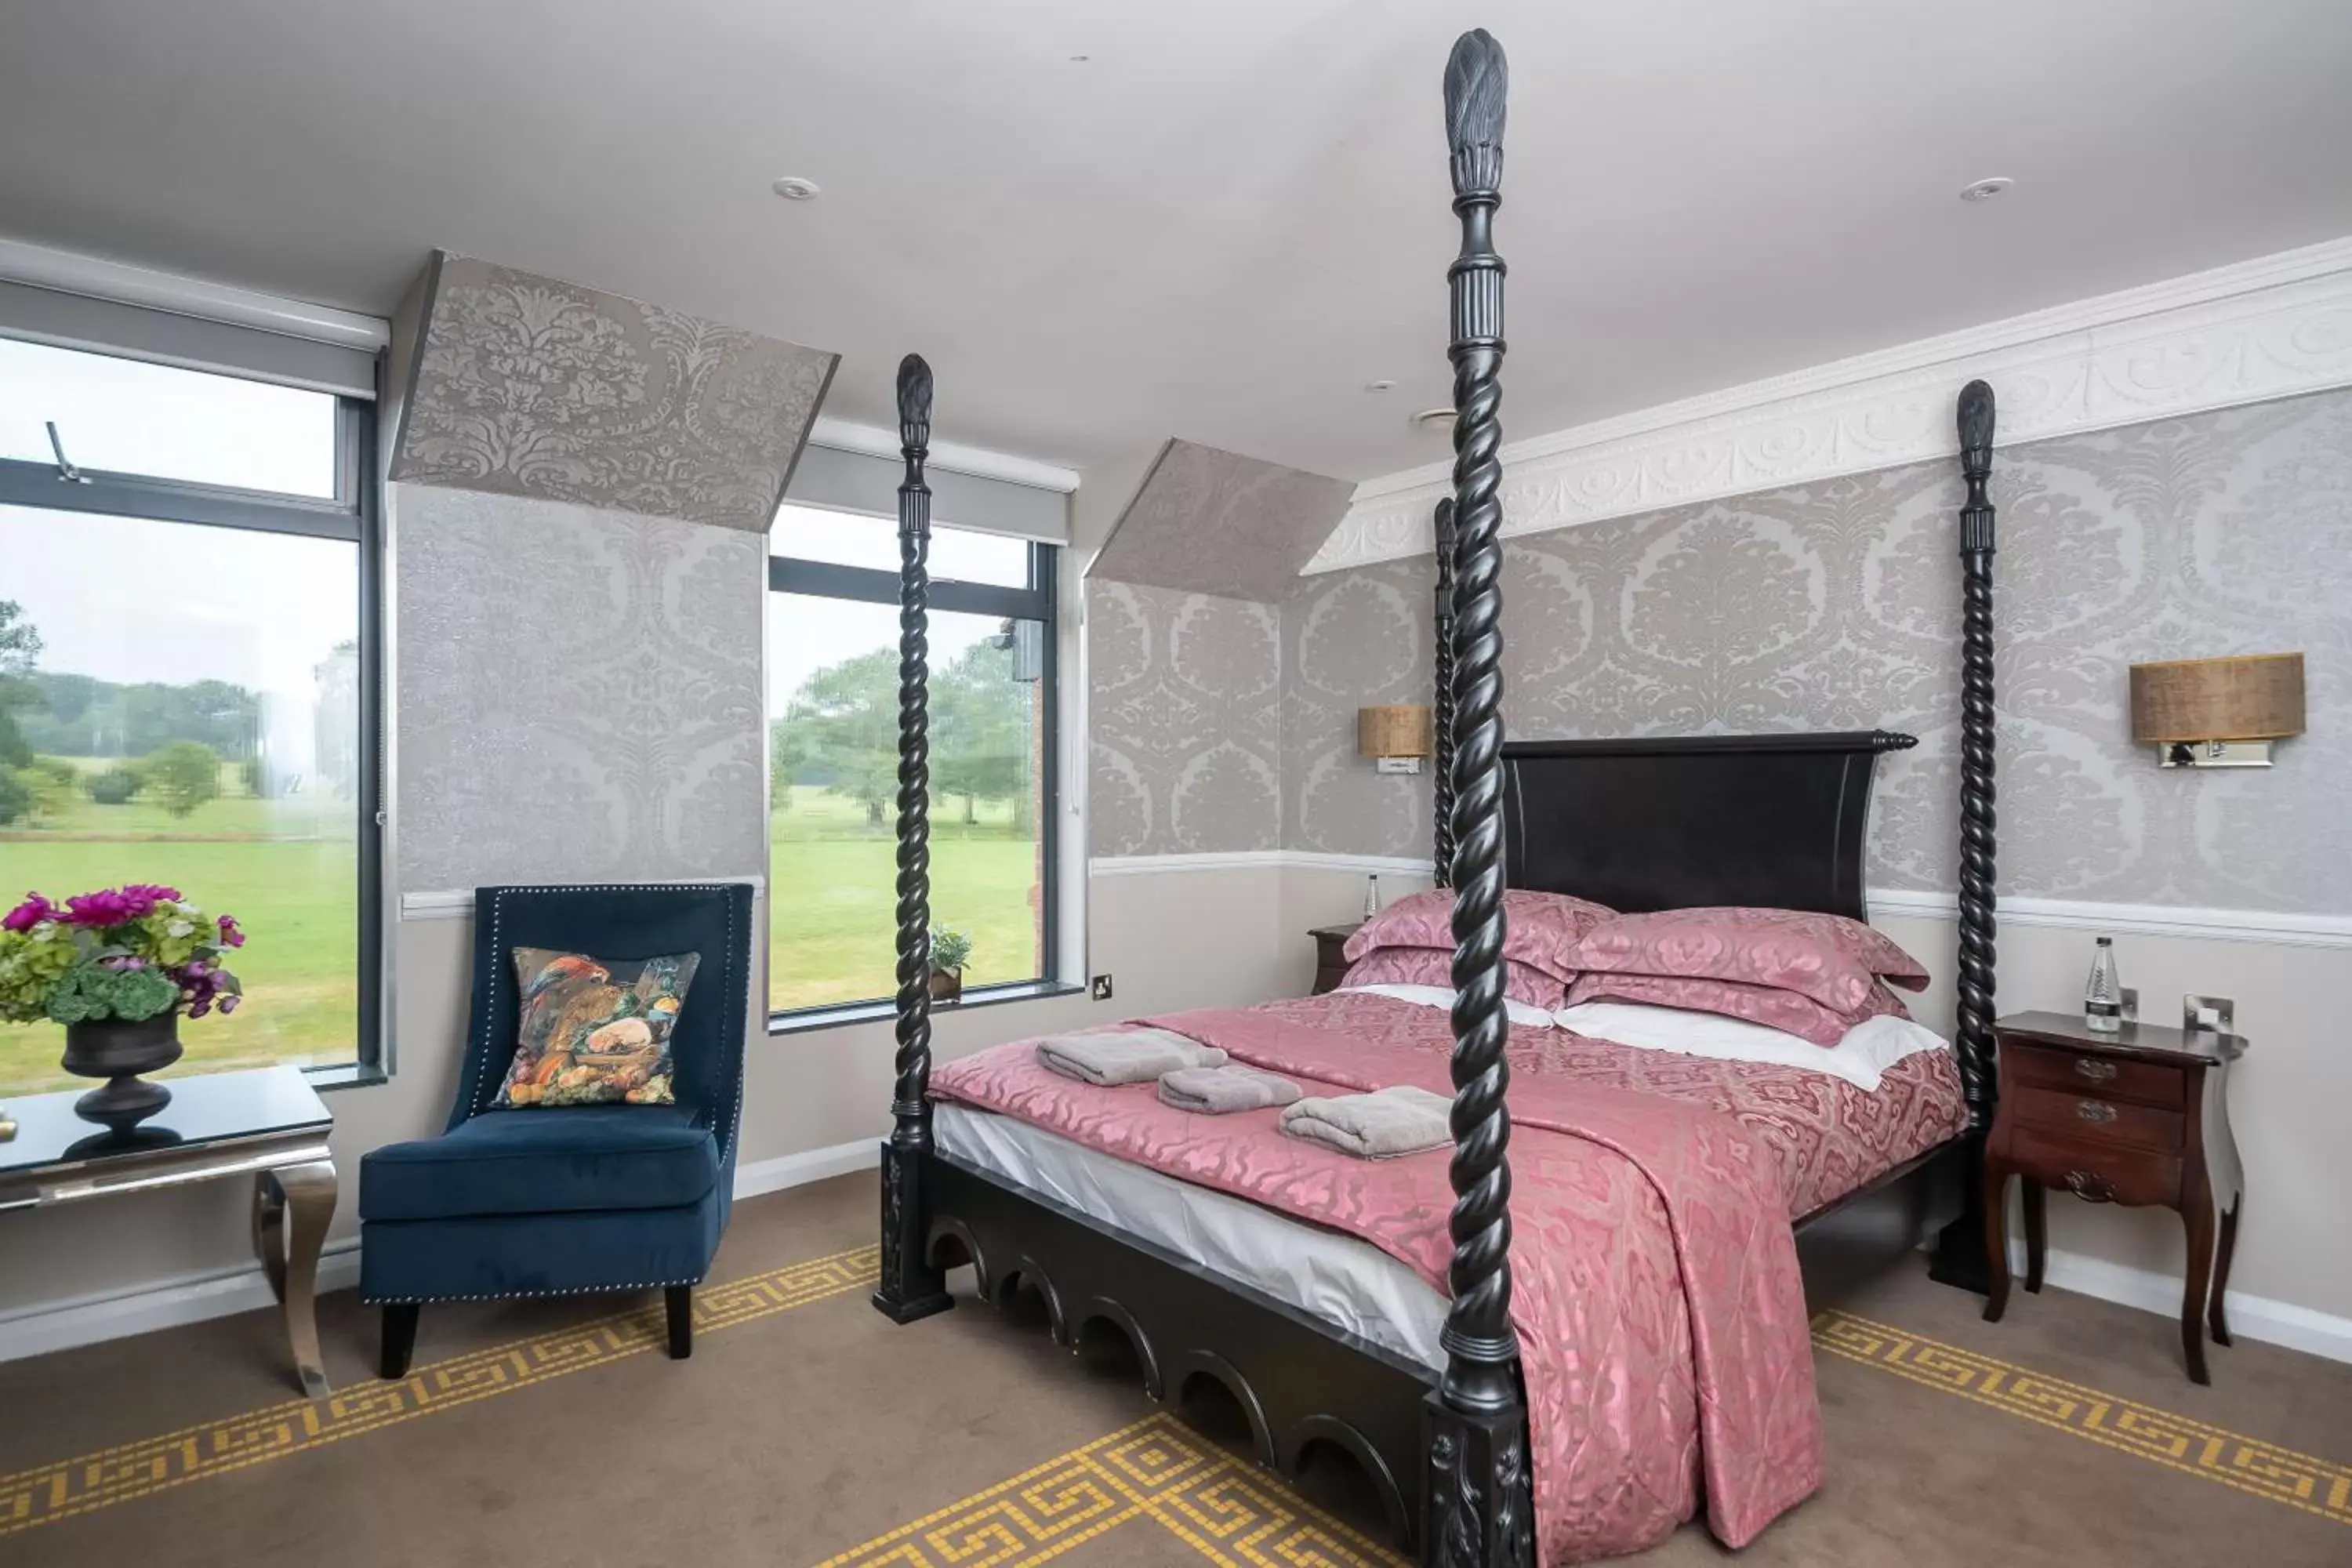 Bedroom, Room Photo in Guildford Manor Hotel & Spa